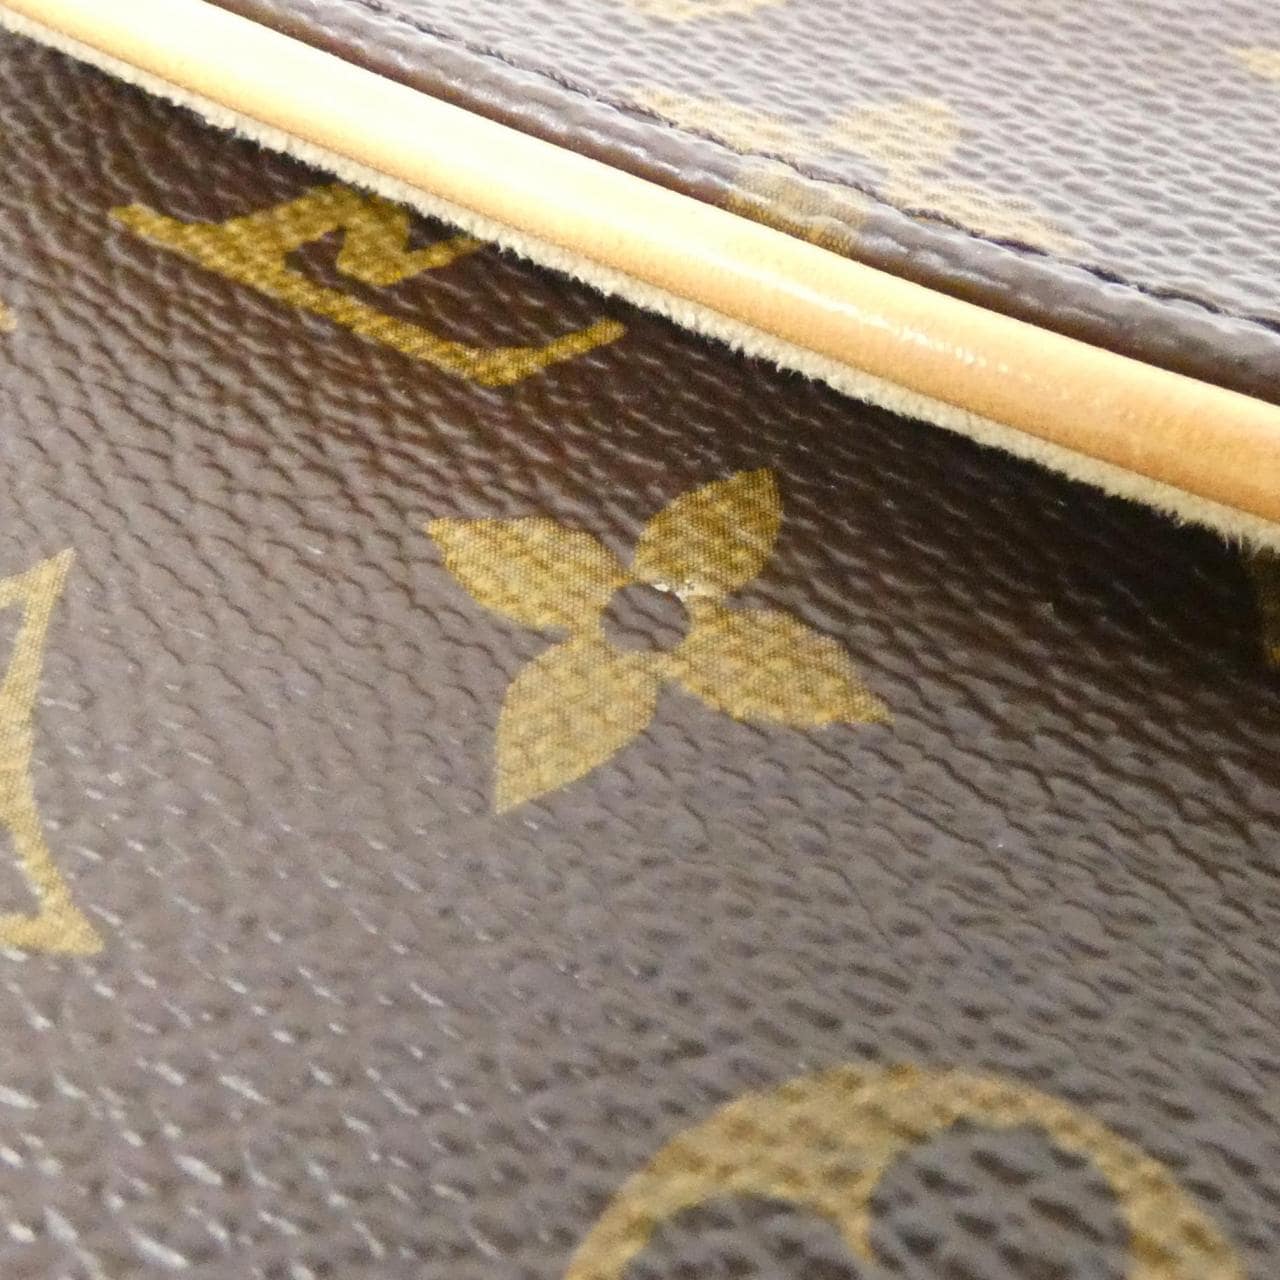 LOUIS VUITTON Monogram Pochette Florentine XS M51855+M67303 Waist Bag